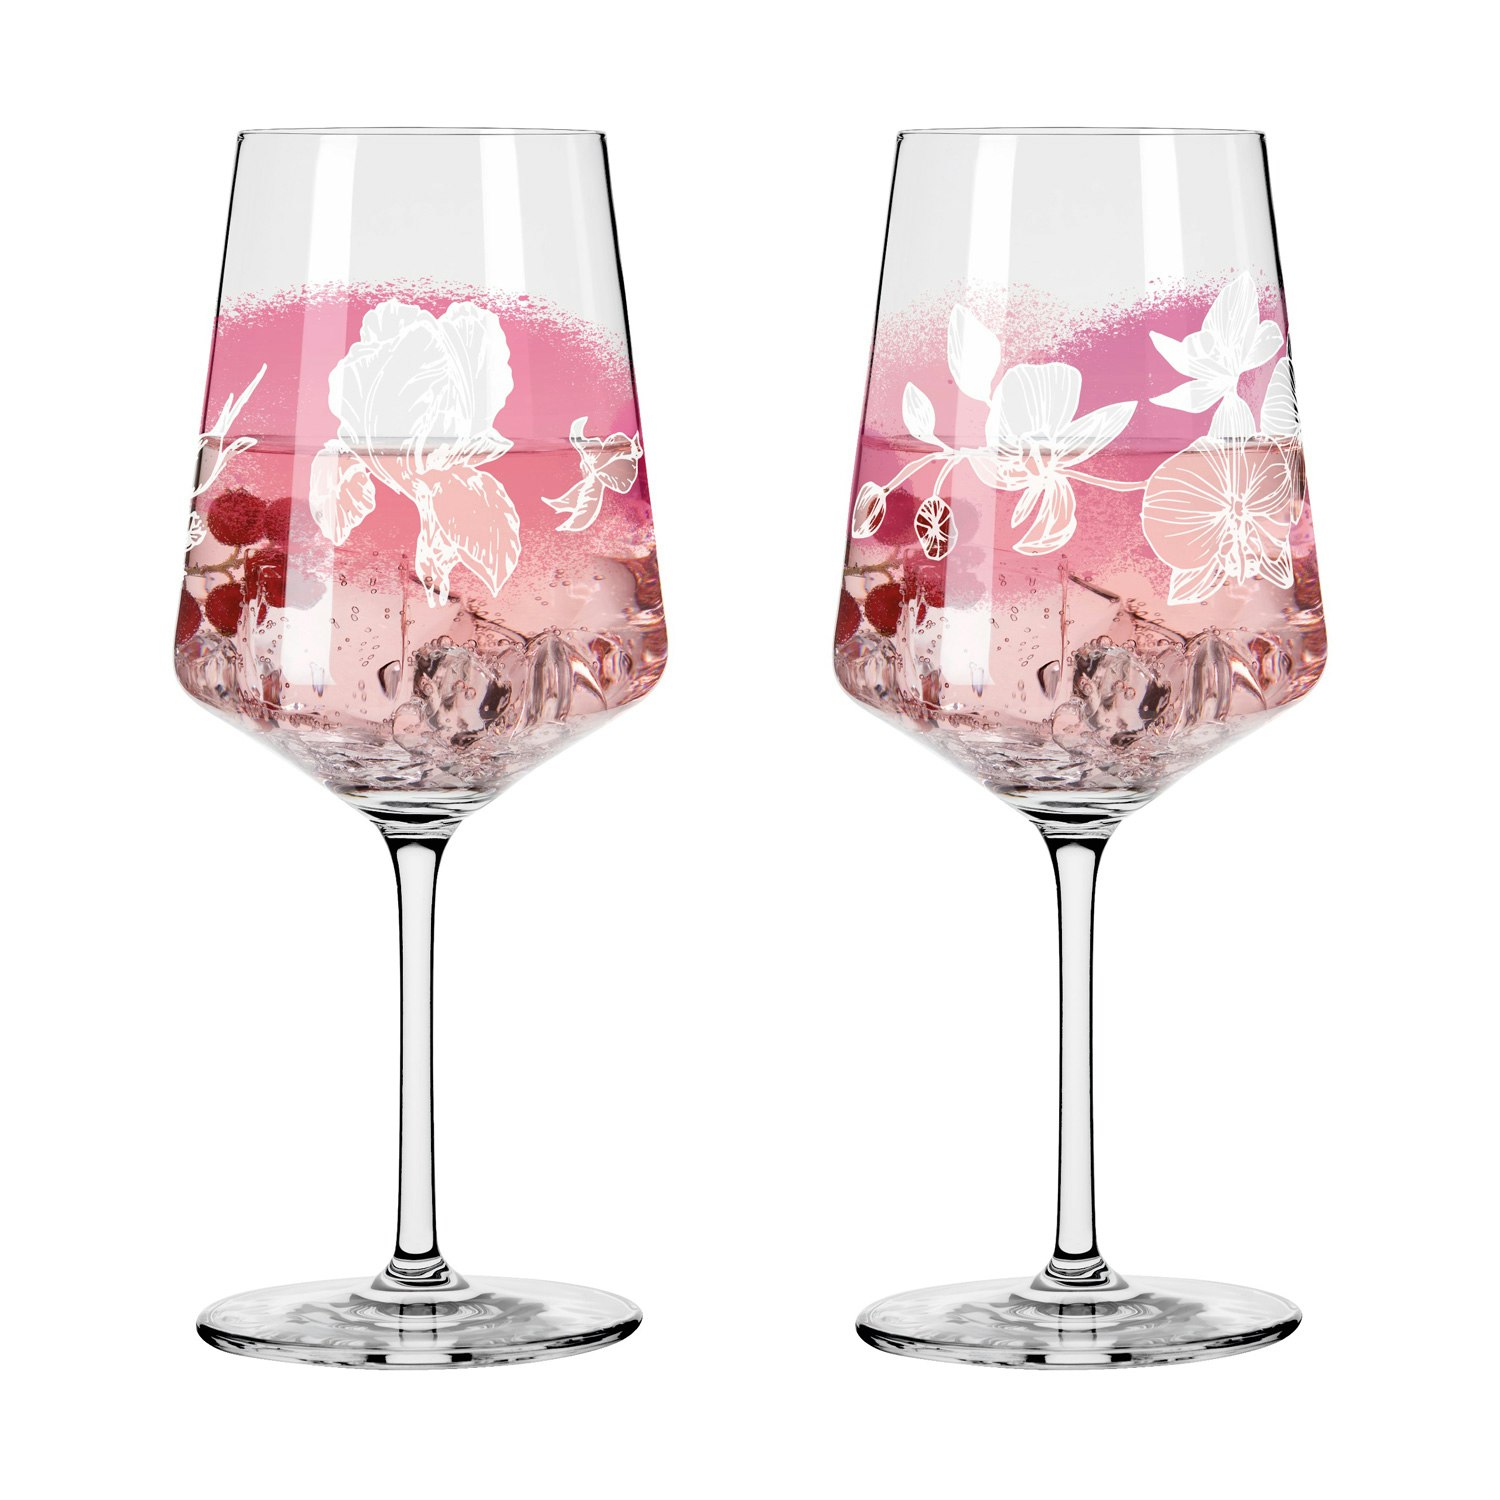 Sommersonett Wine Glass 2-pack, NO: 3 - Ritzenhoff @ RoyalDesign